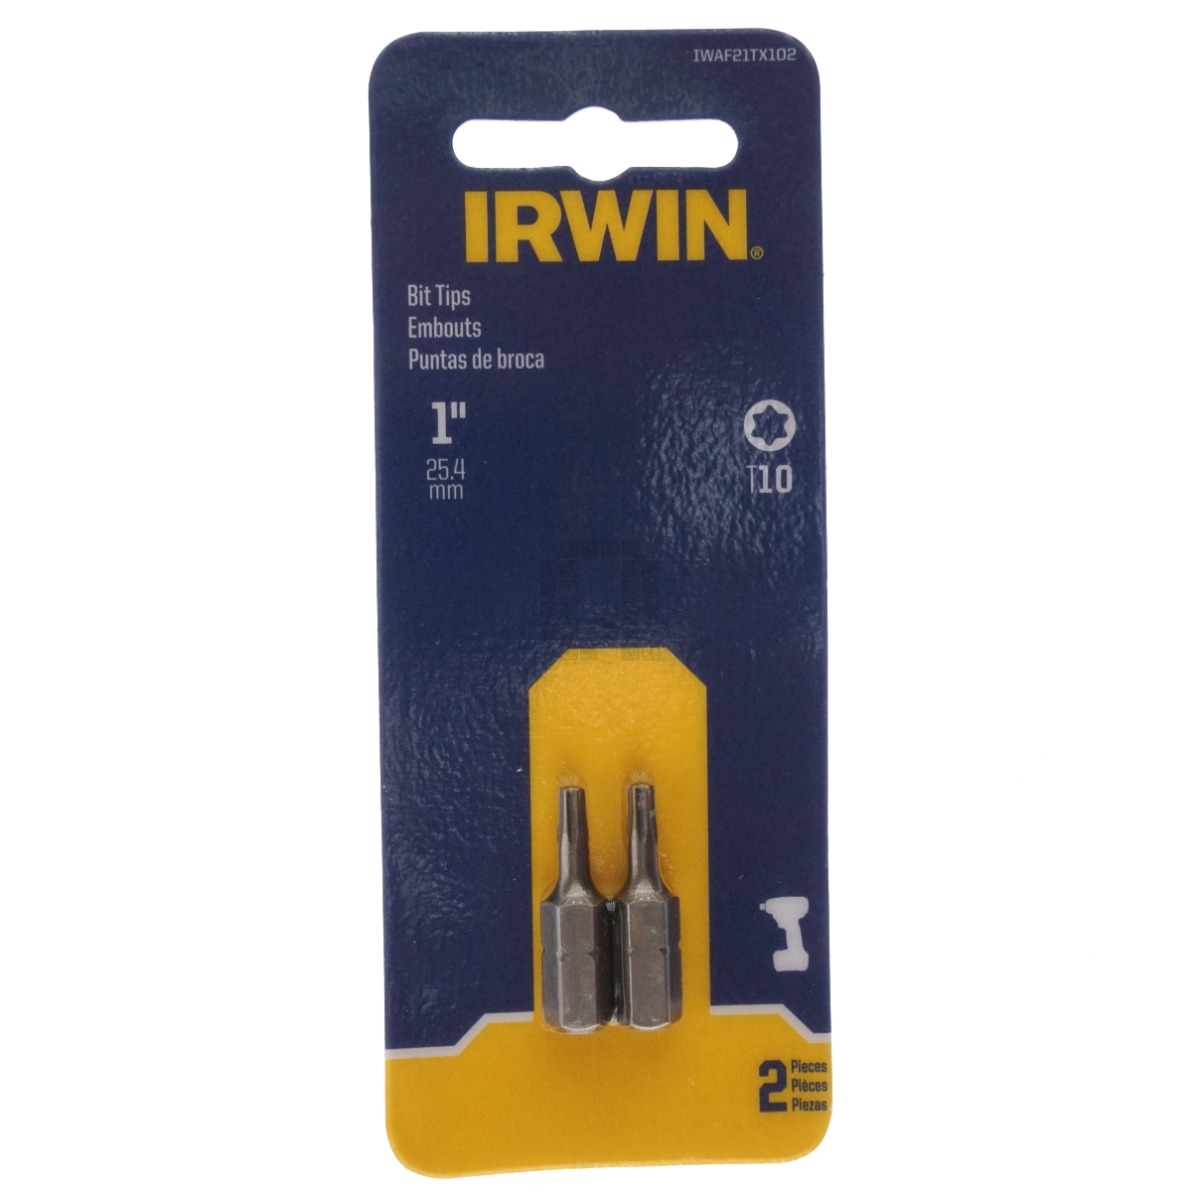 Irwin IWAF21TX102 T10 Torx Bit Tips, 1" Length, 2 Pack